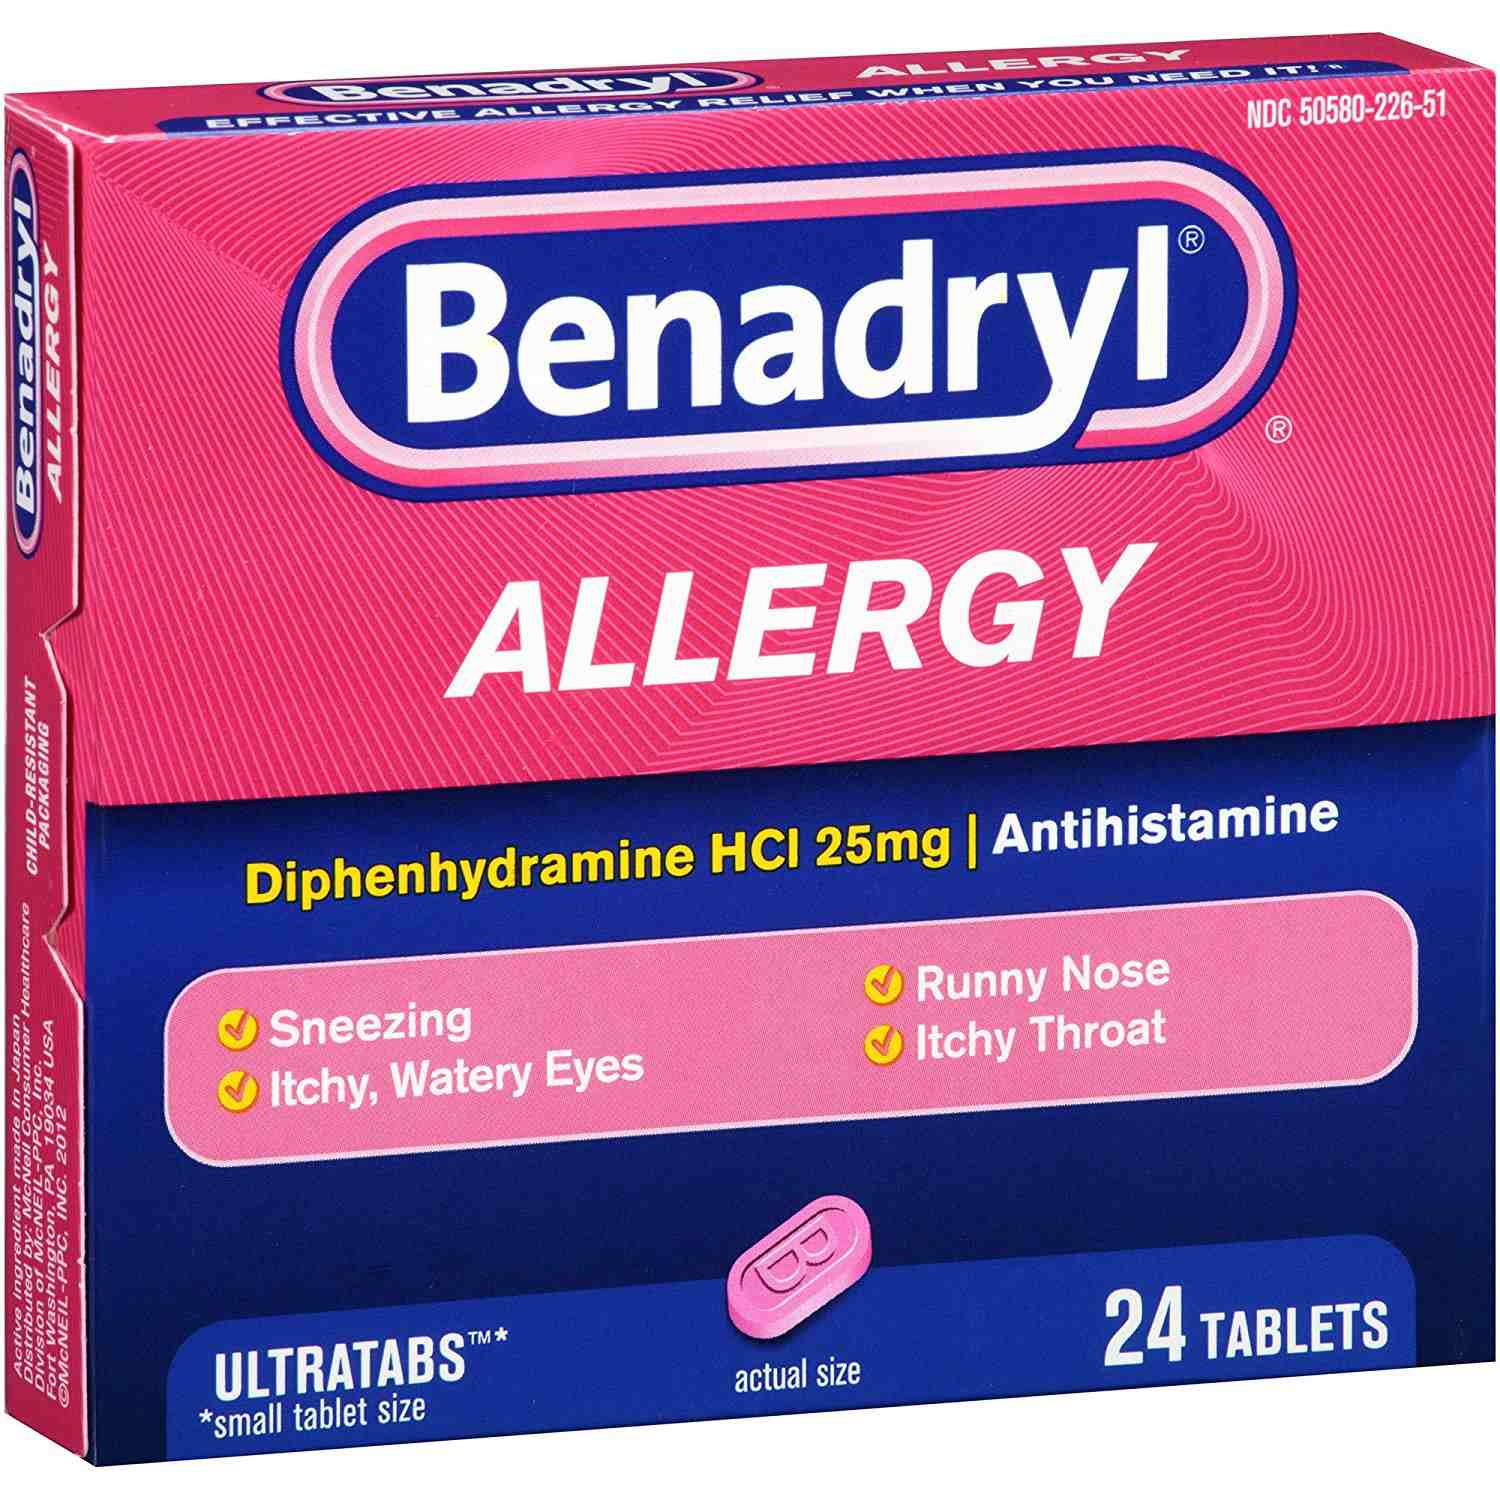 The 8 Best OTC Allergy Medicines of 2019